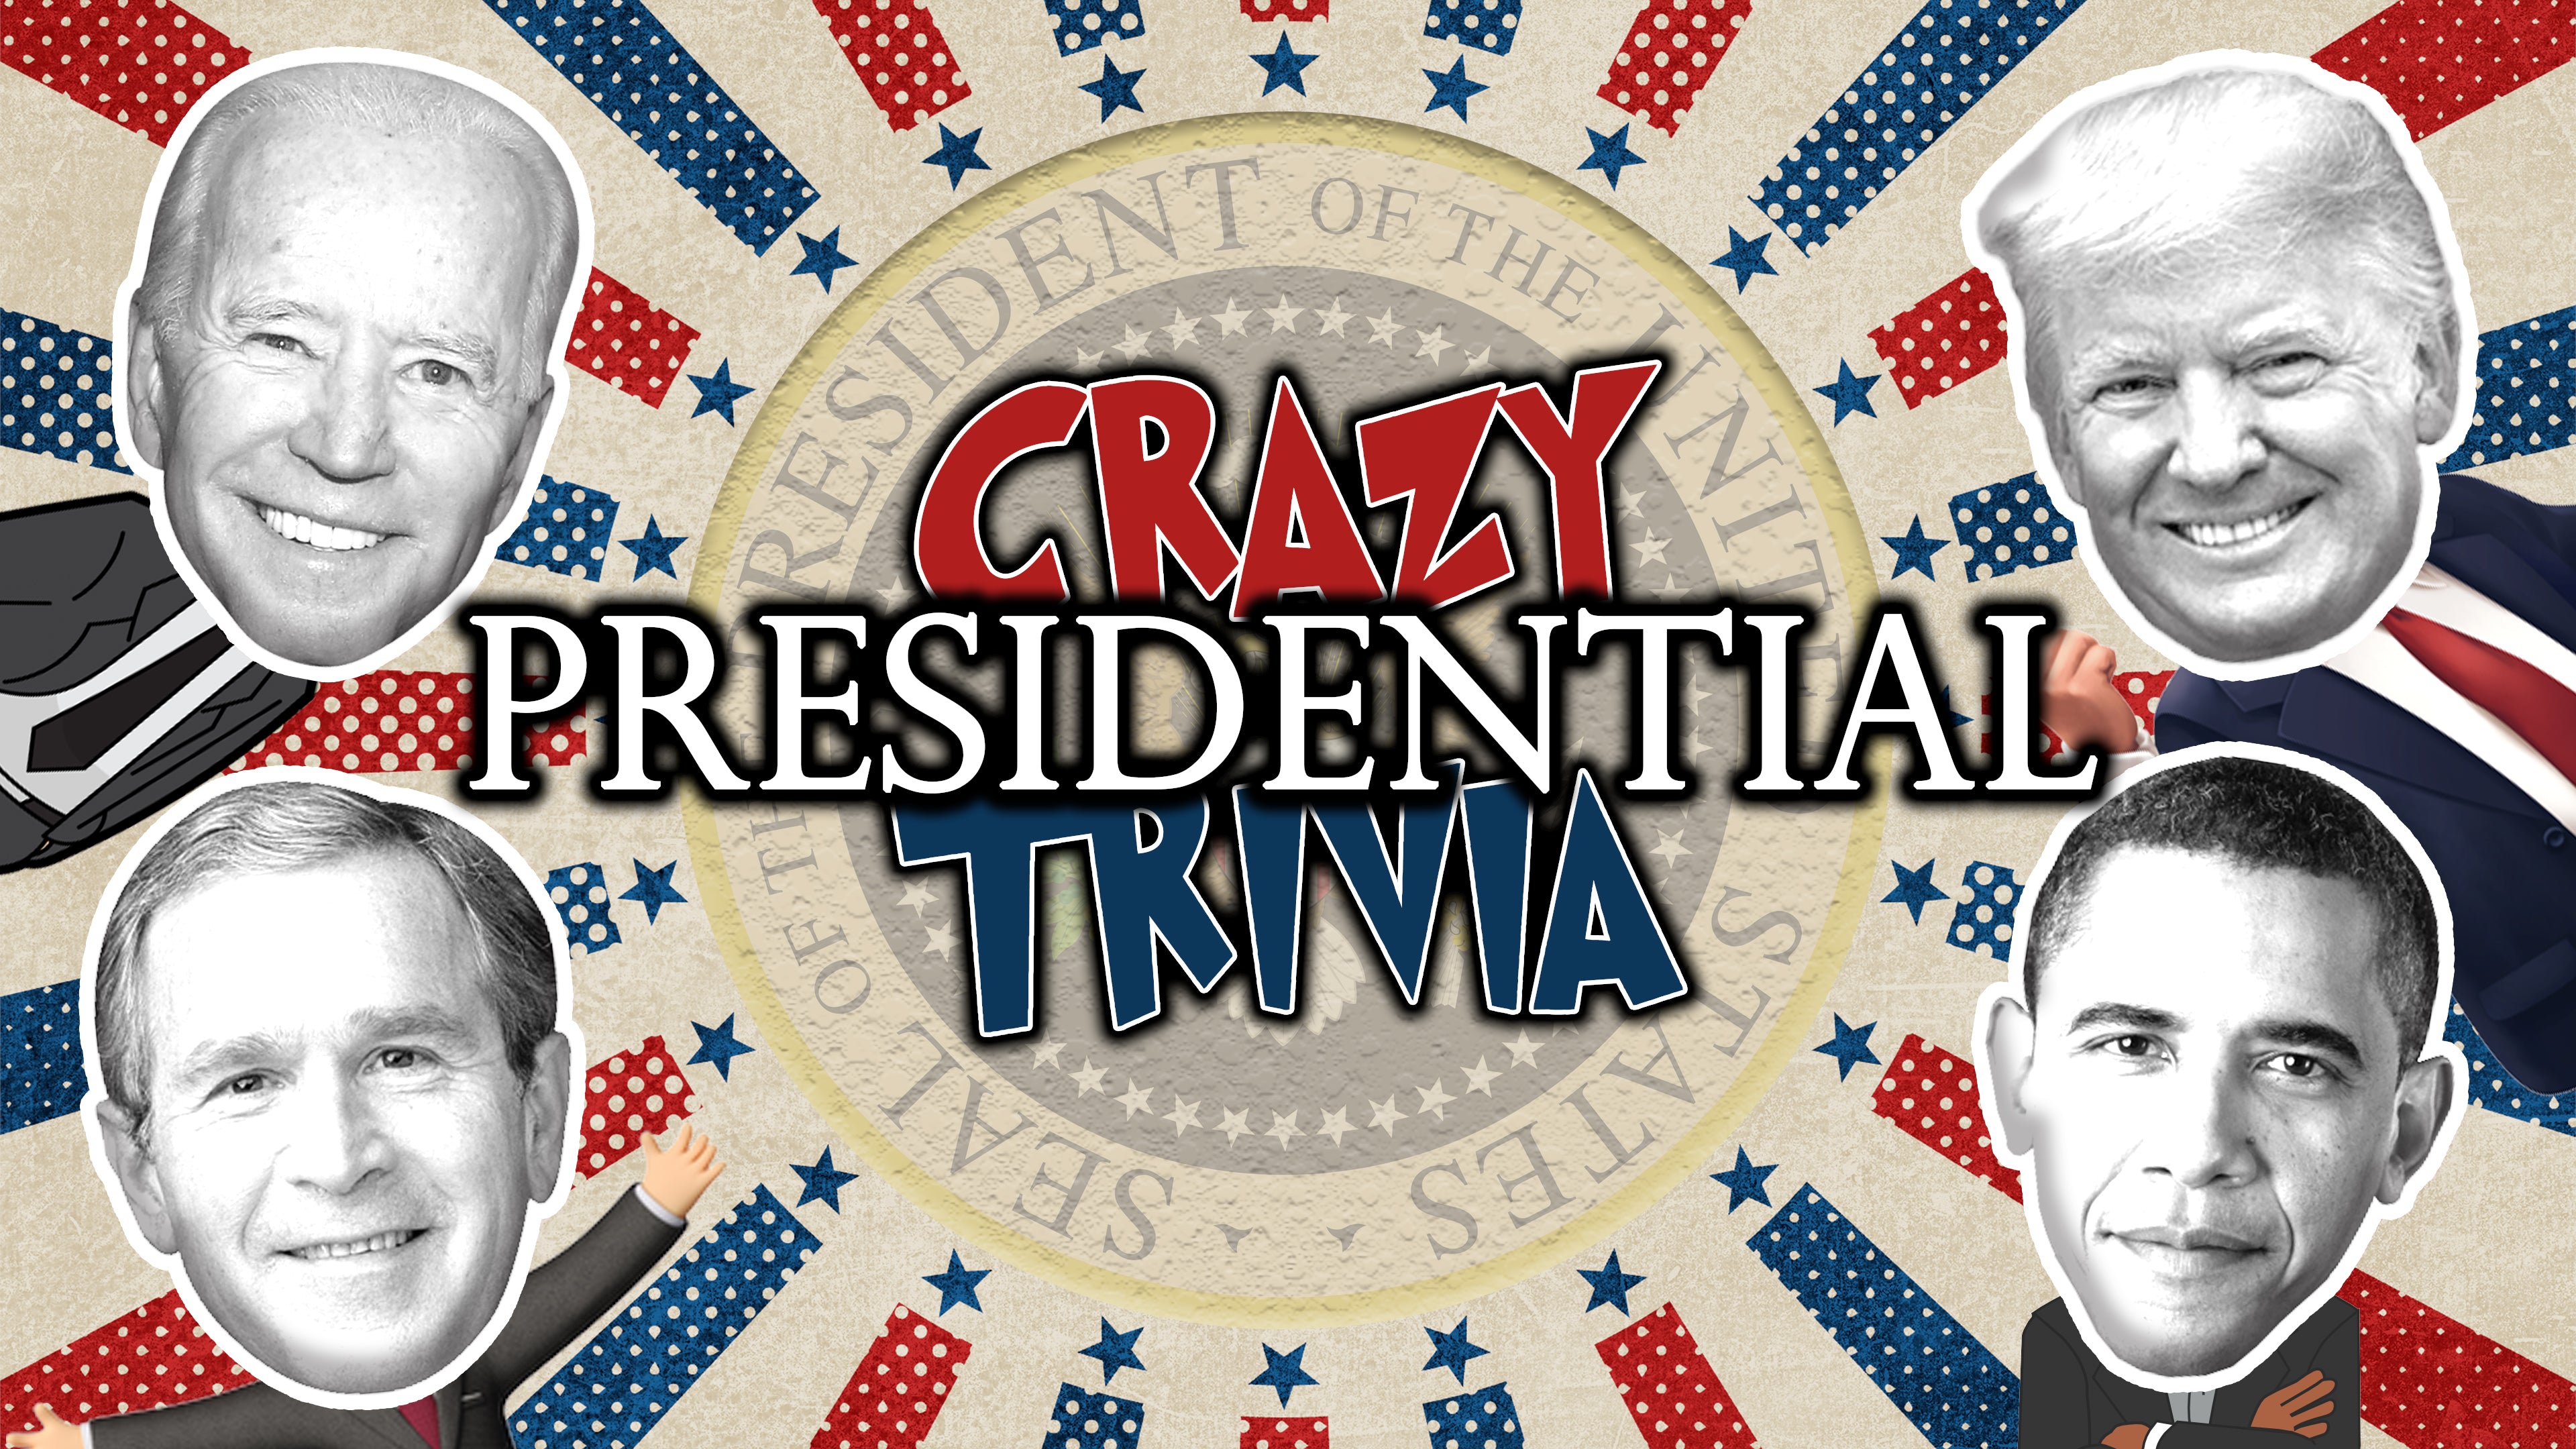 Crazy Presidential Trivia